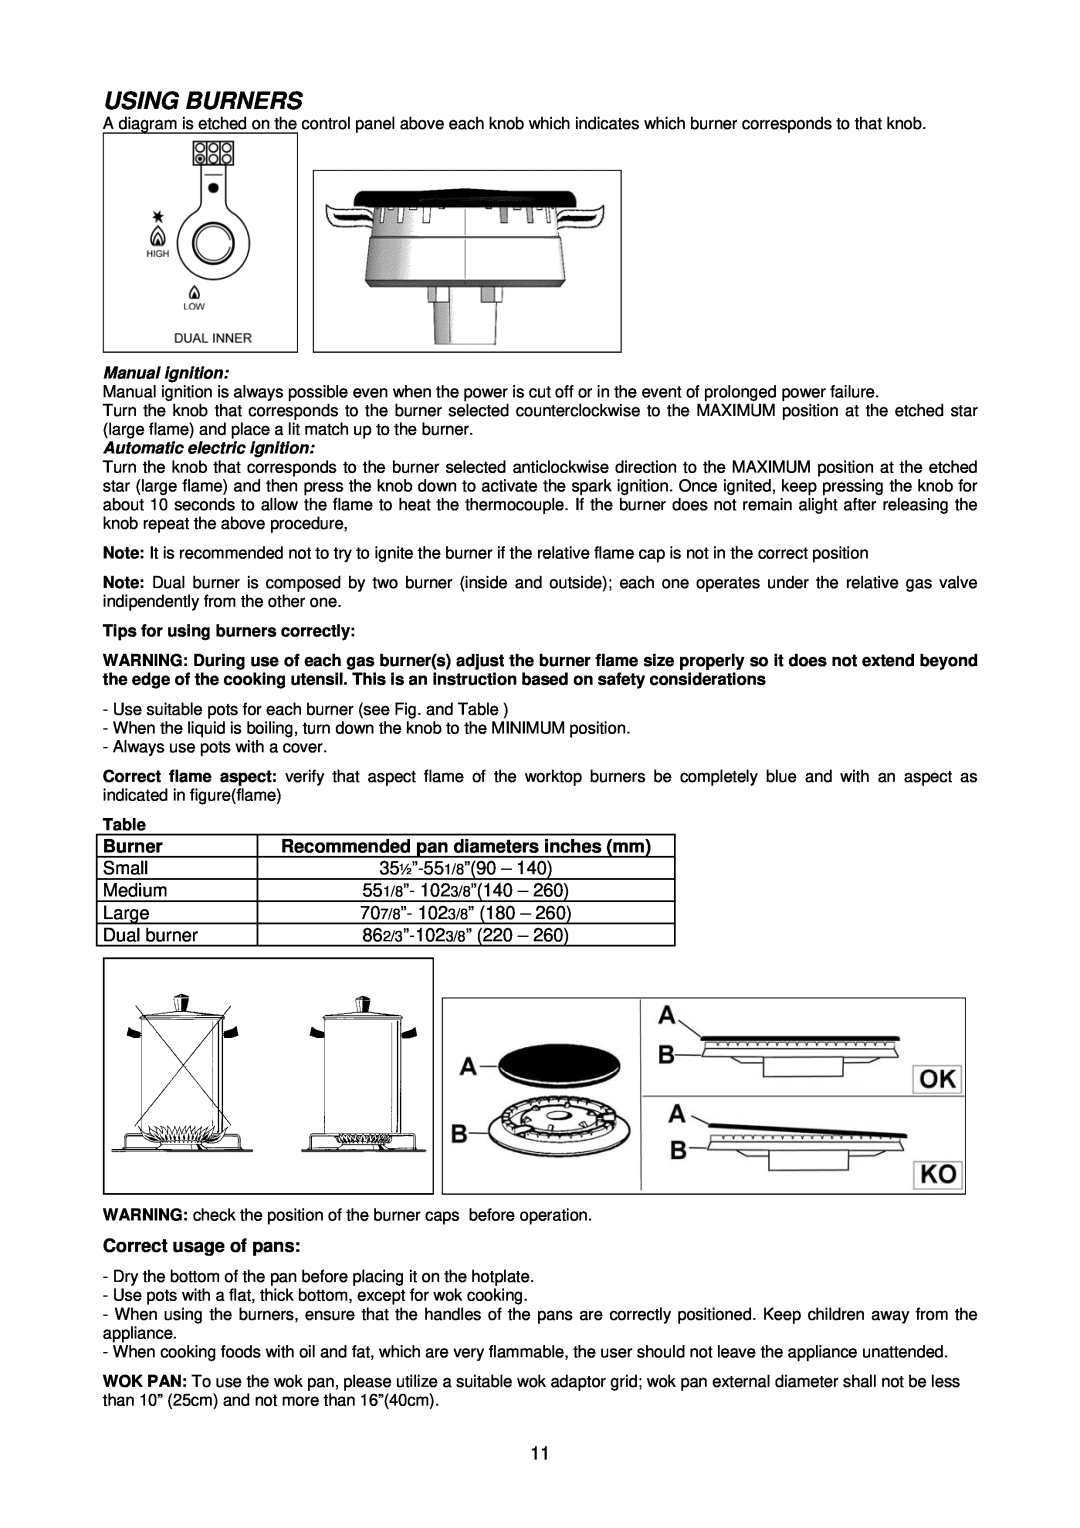 Bertazzoni CB36600X Using Burners, Recommended pan diameters inches mm, Small, 35½”-551/8”90, Medium, 551/8”- 1023/8”140 